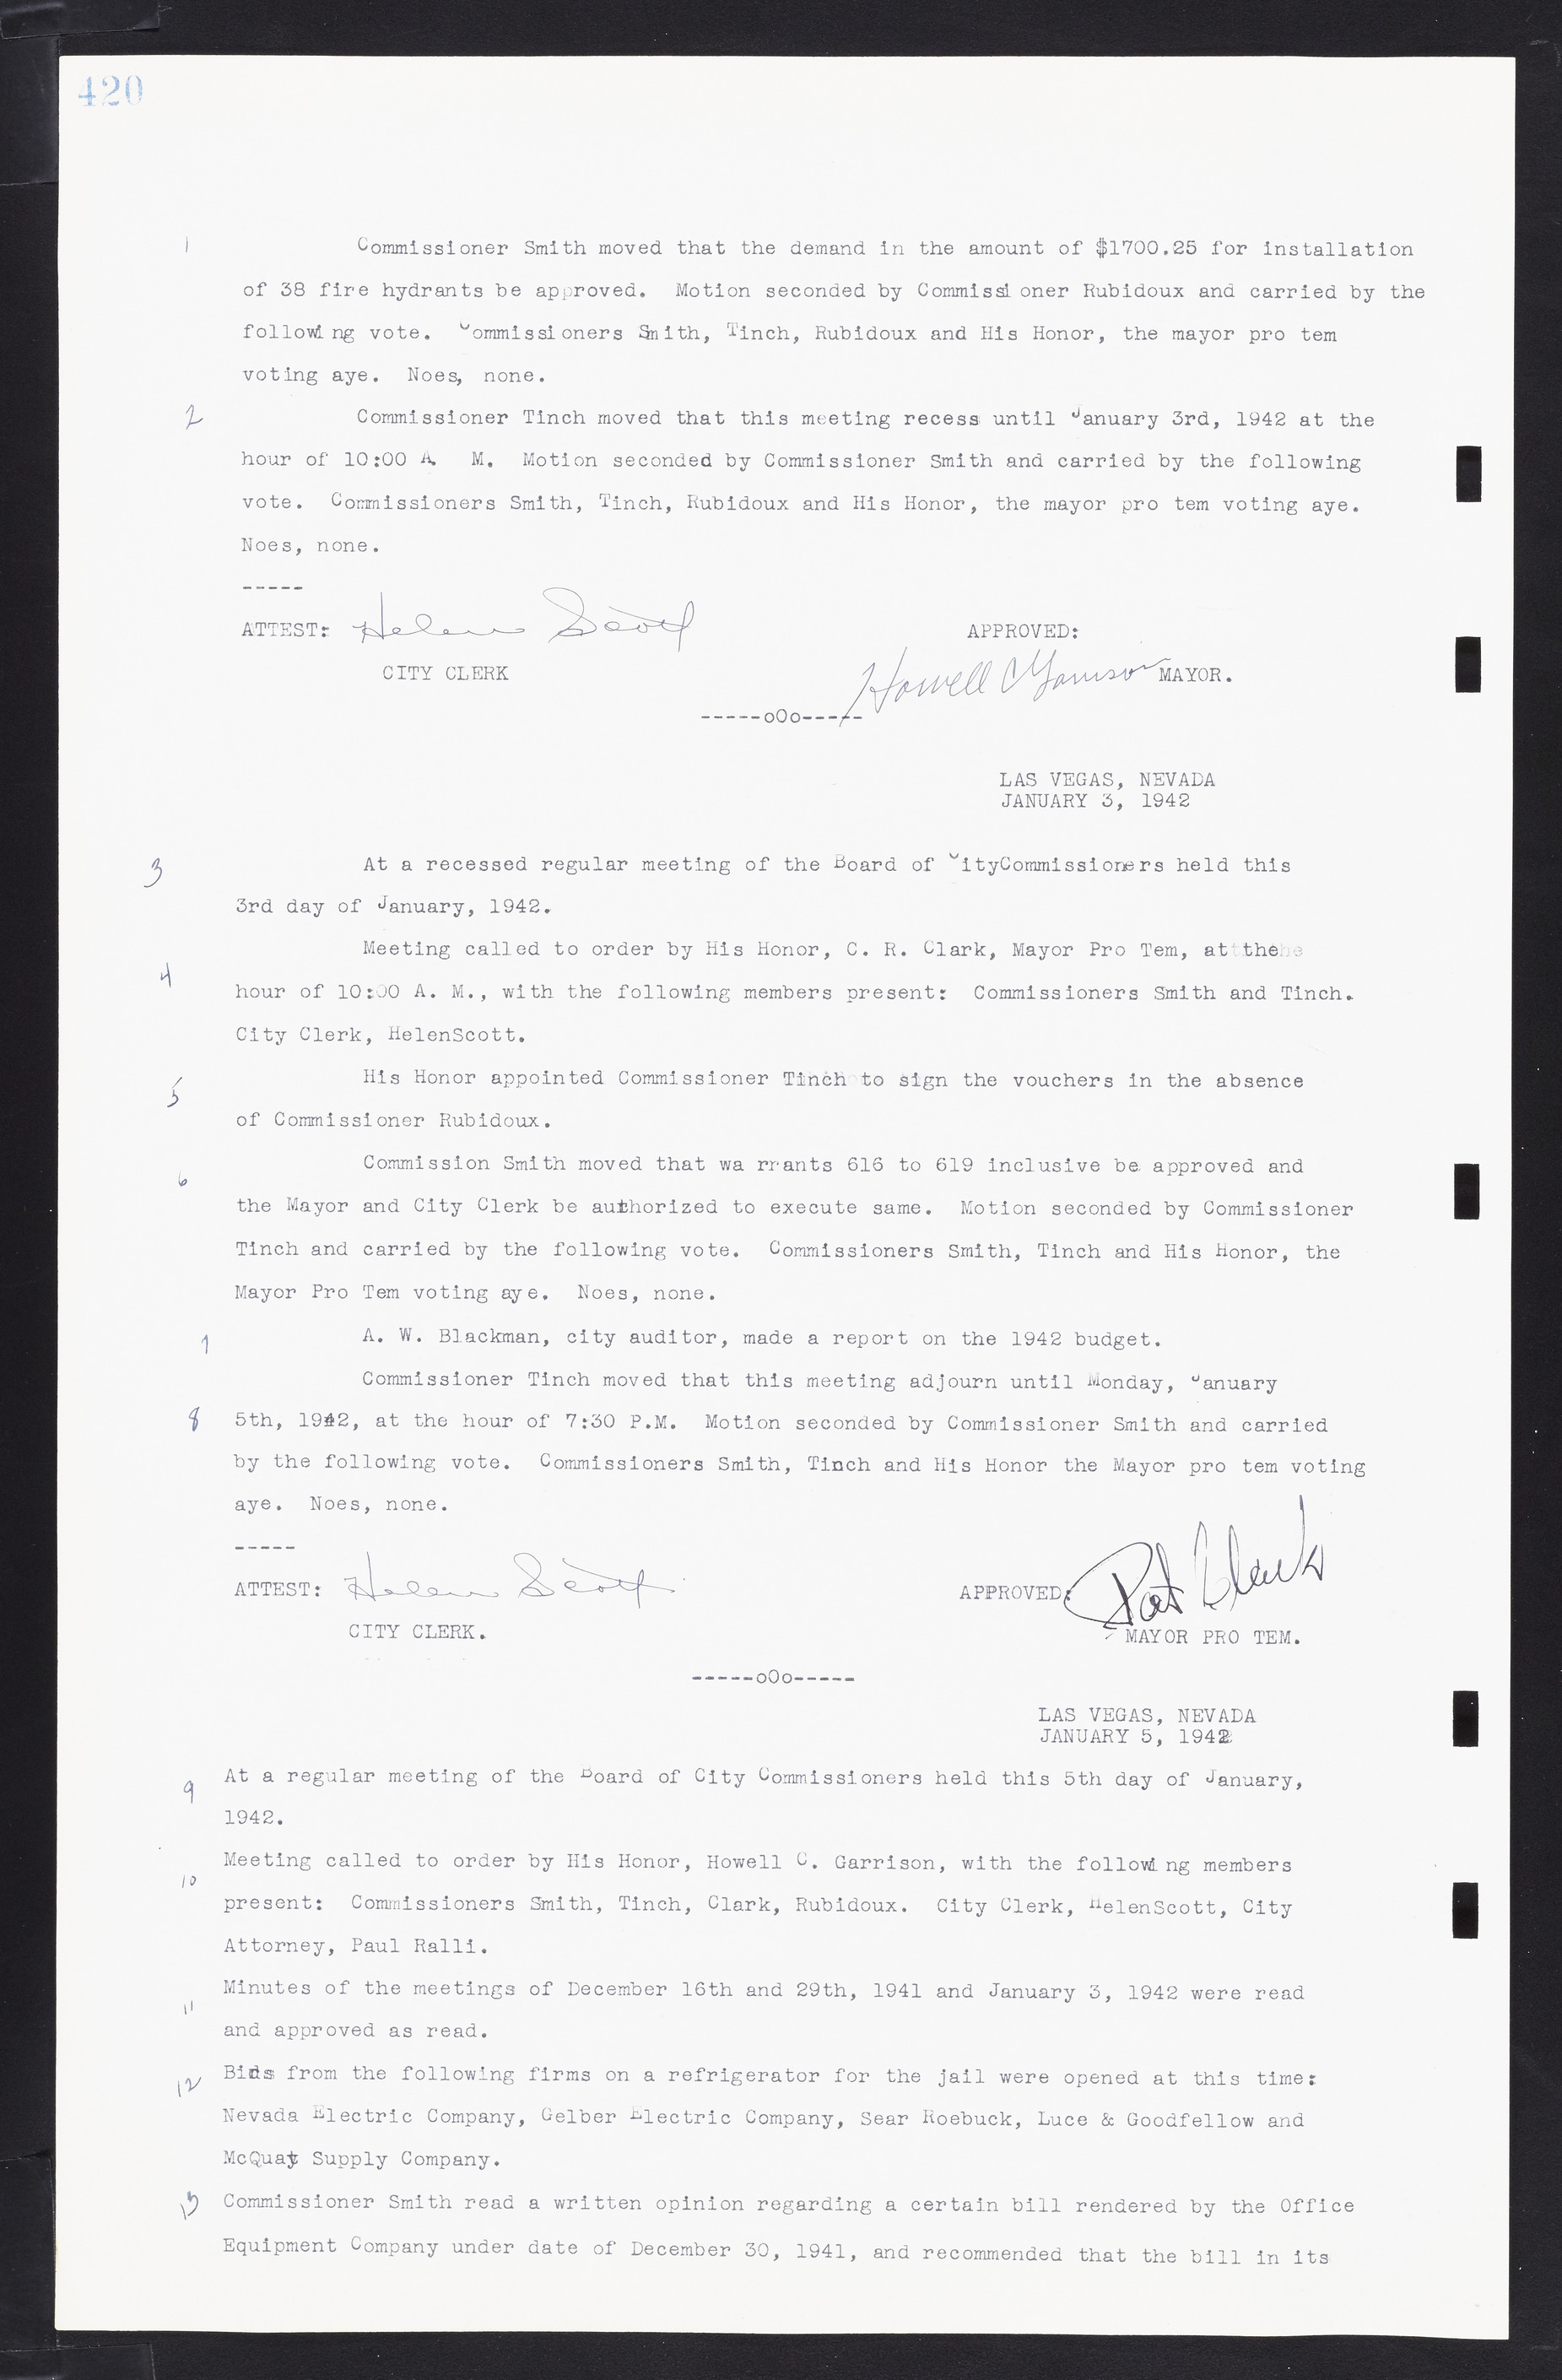 Las Vegas City Commission Minutes, February 17, 1937 to August 4, 1942, lvc000004-446